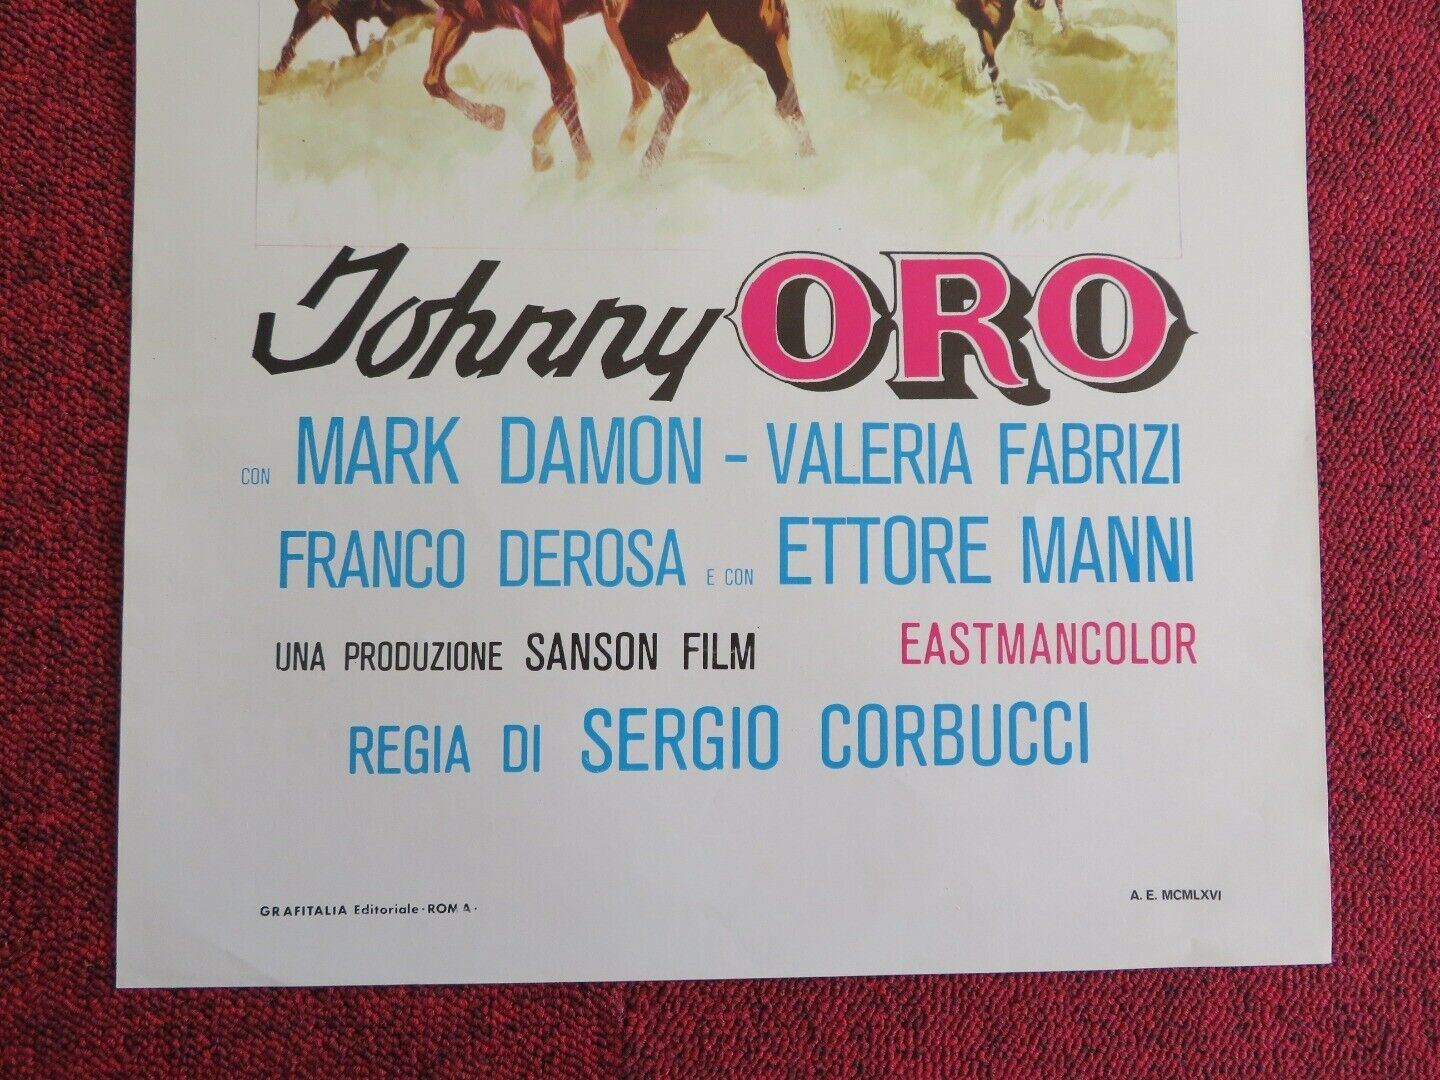 Ringo and His Golden Pistol ITALIAN LOCANDINA (27.5"x13") POSTER MARK DAMON 1966